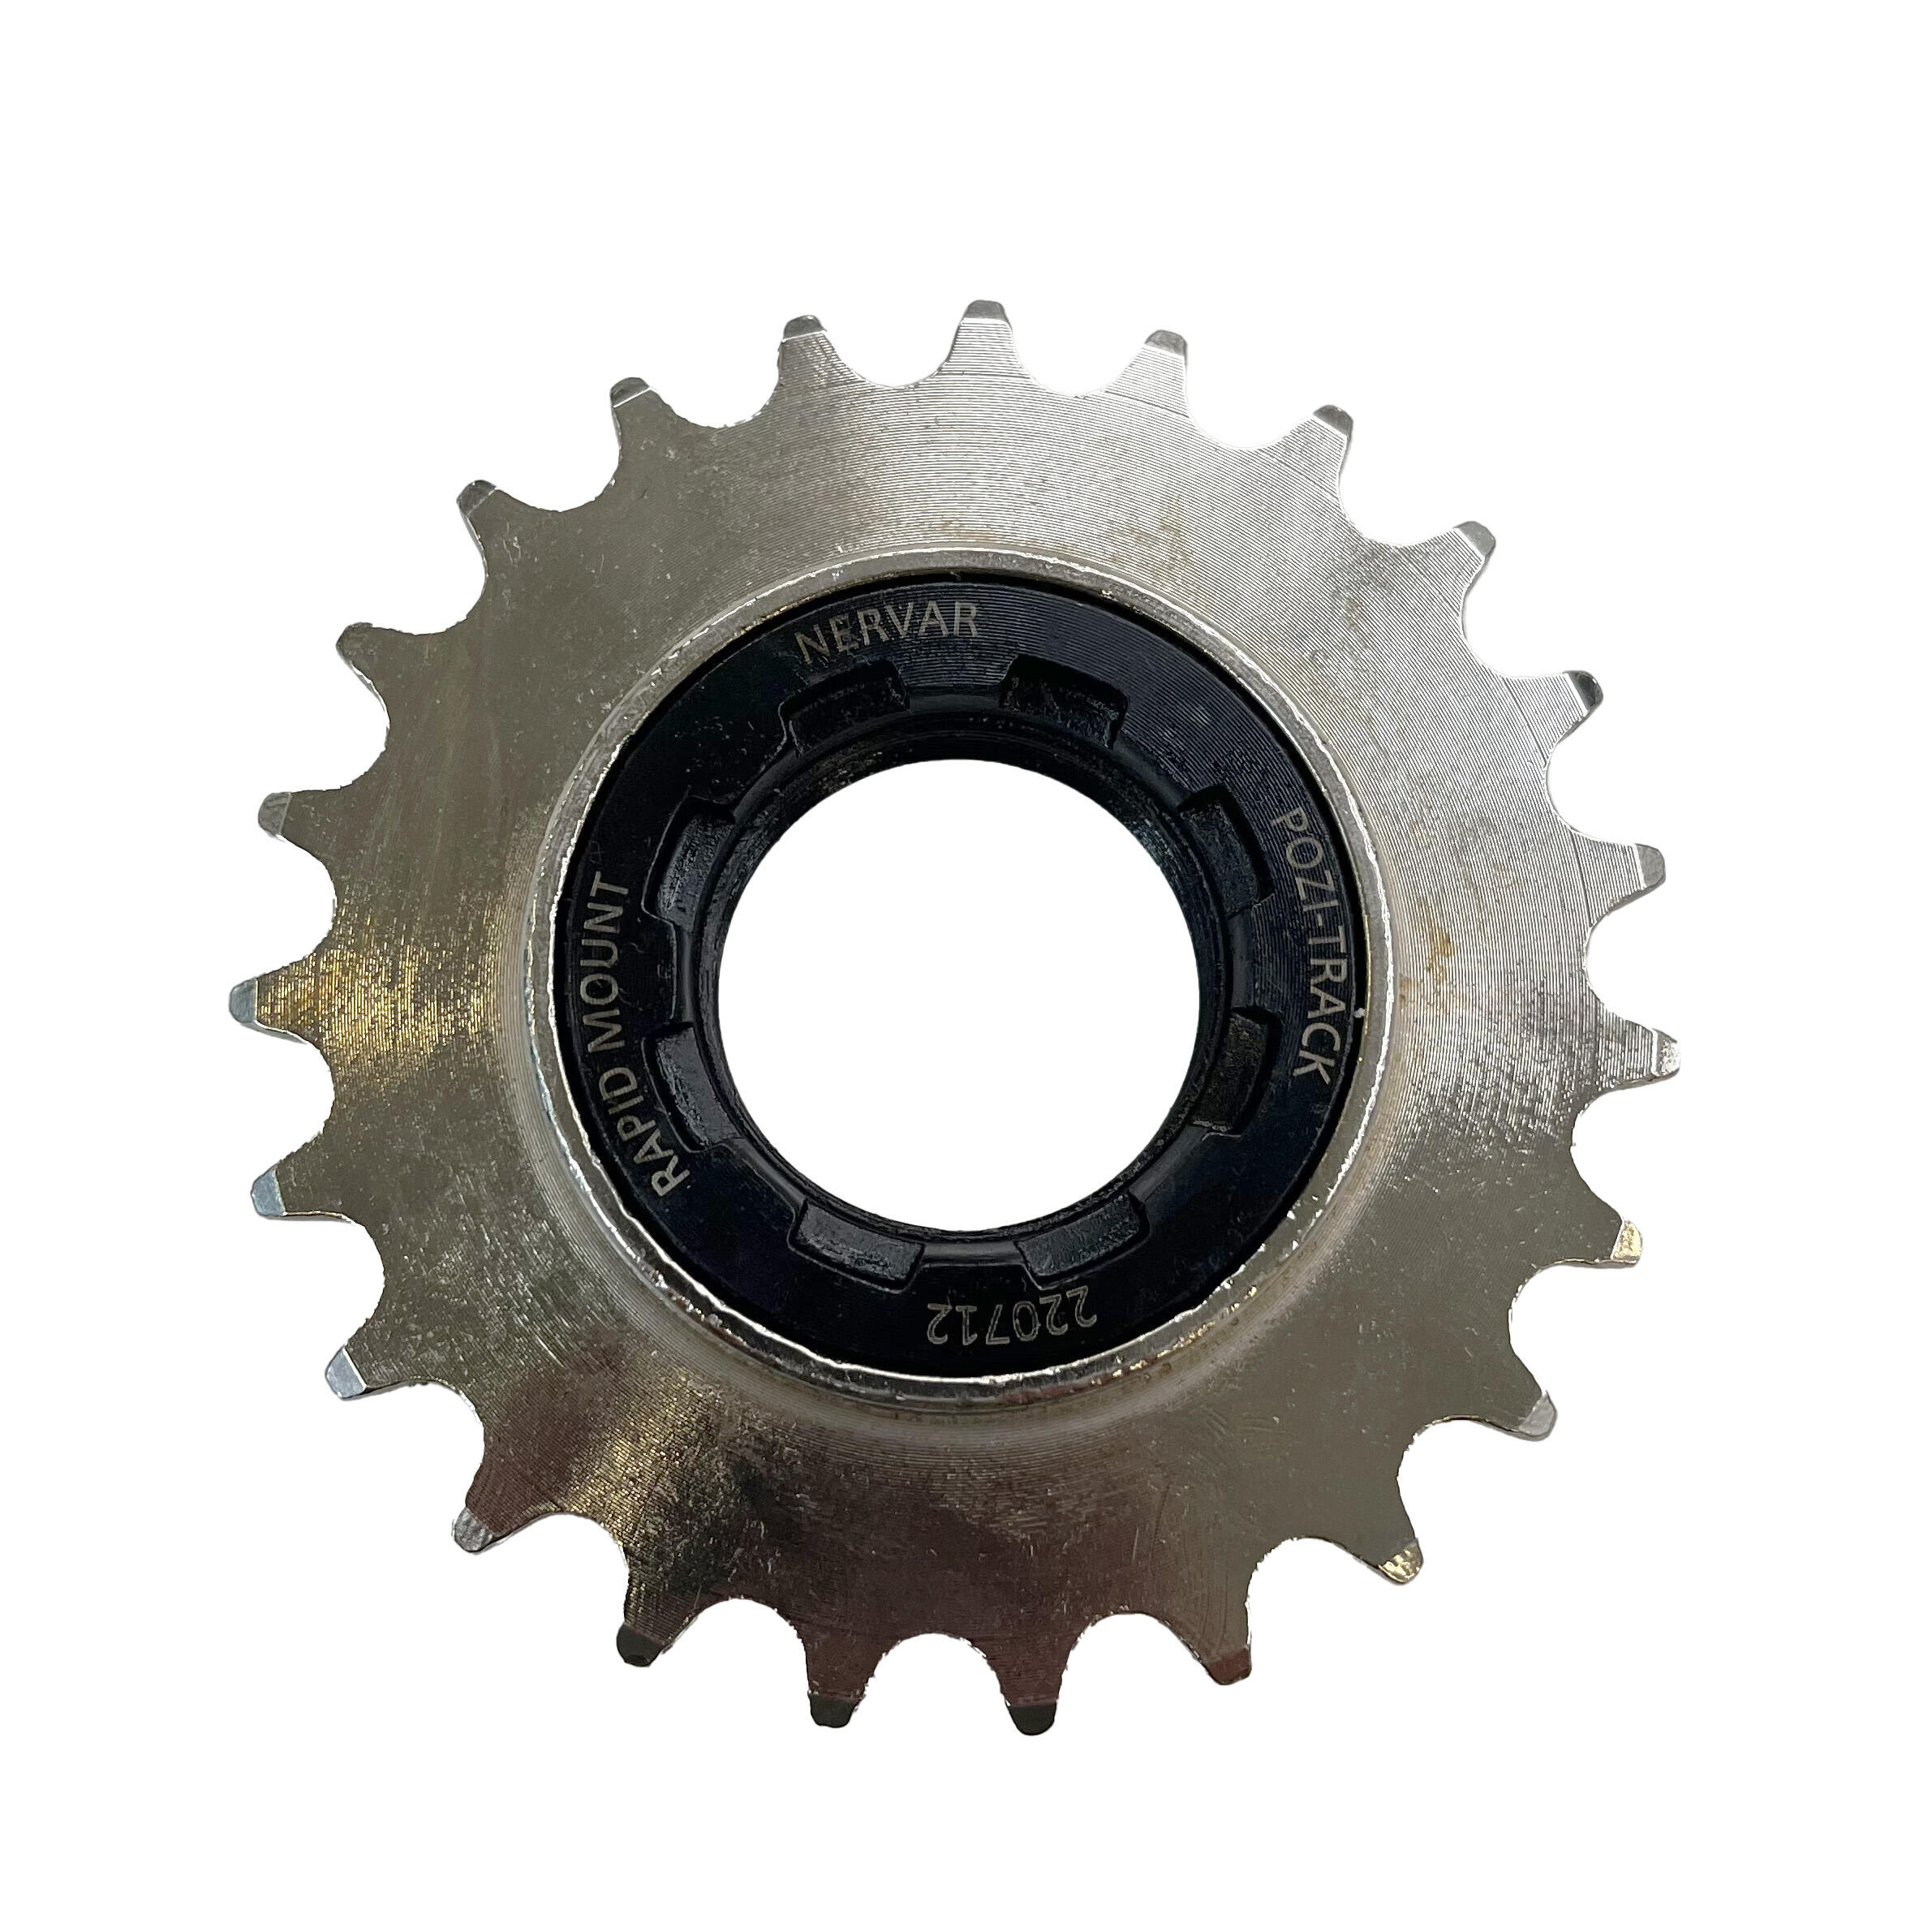 BTWIN 23-Tooth Screw-On Freewheel